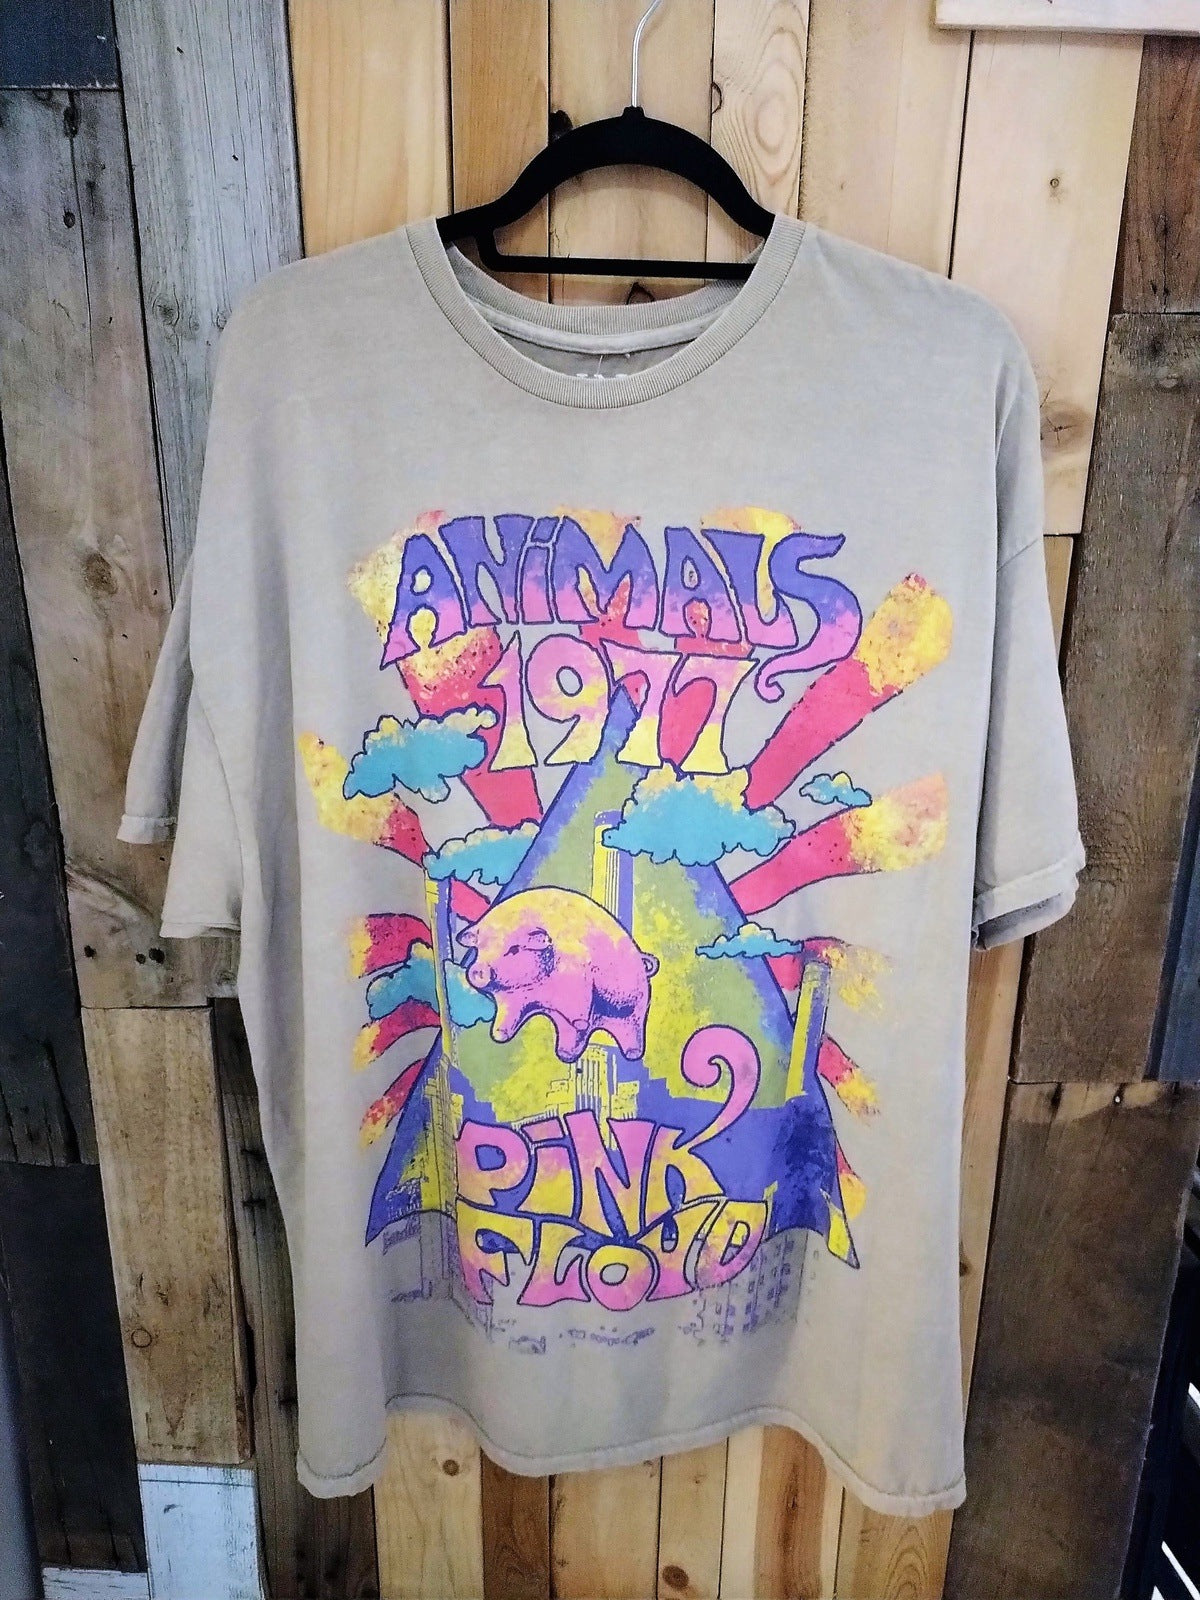 Pink Floyd Official Merchandise "Animals" T Shirt Size XL New!